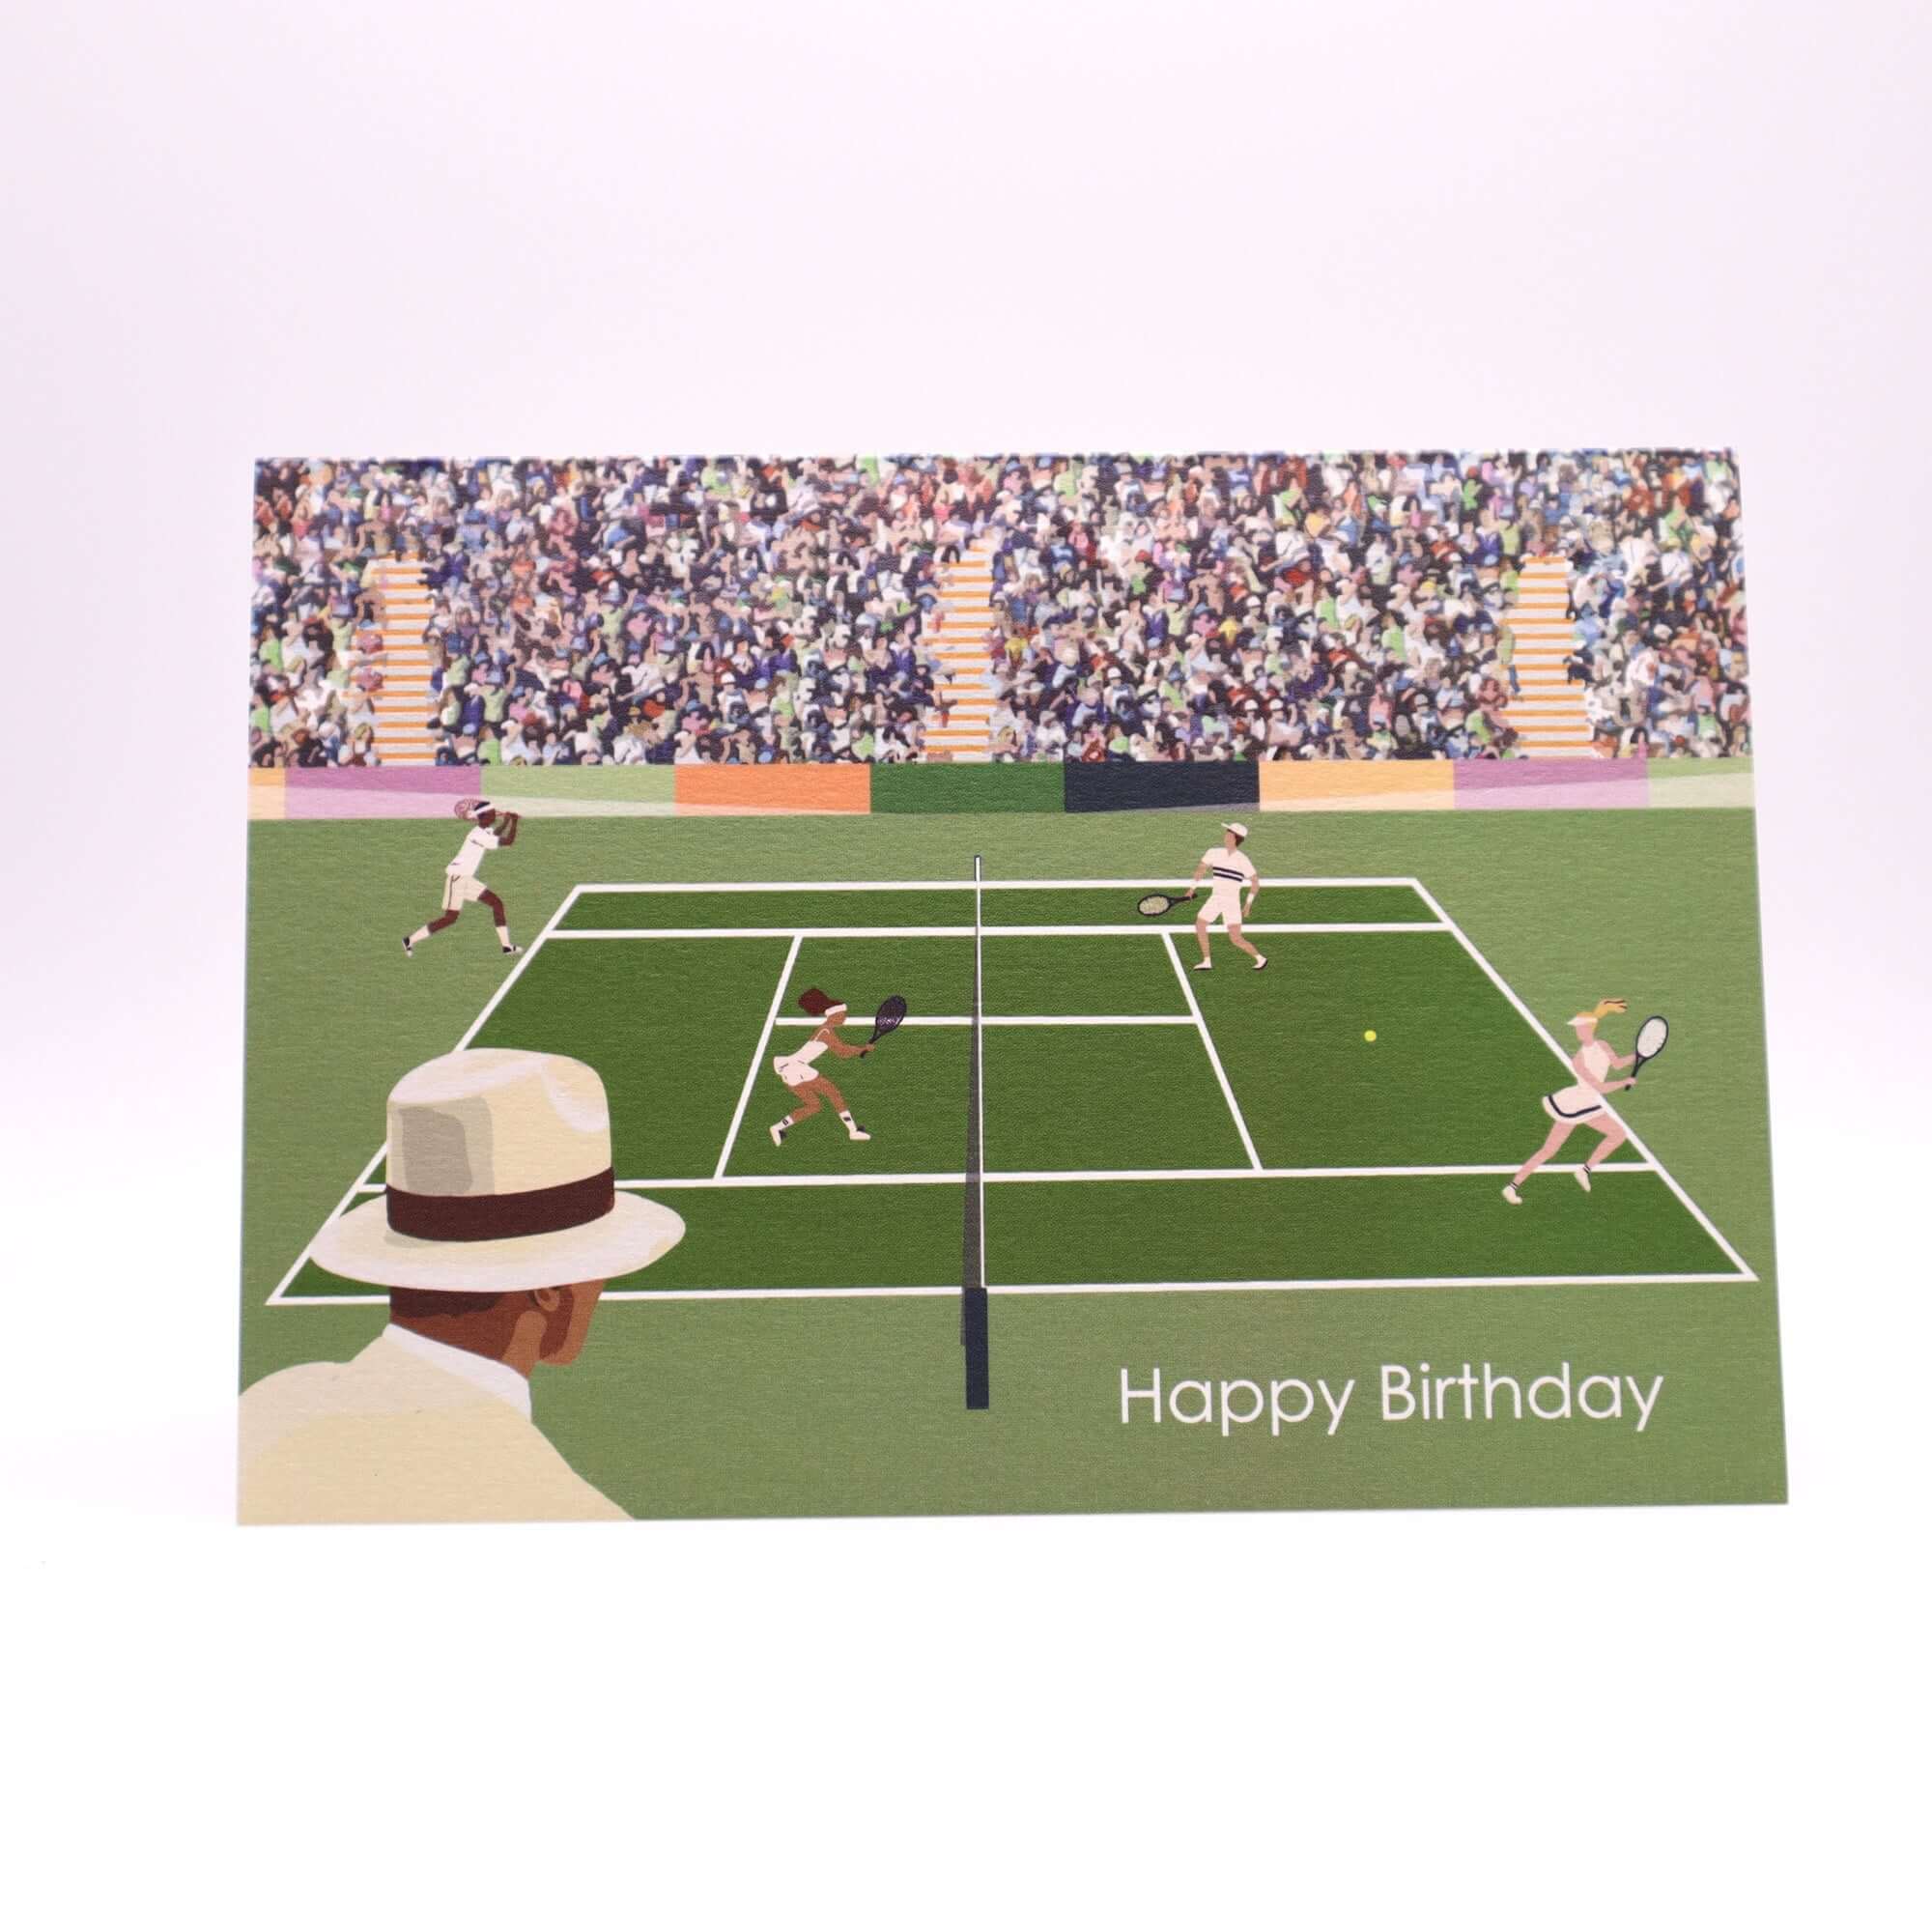 Tennis Birthday Card Greetings Card Mustard and Gray Ltd Shropshire UK